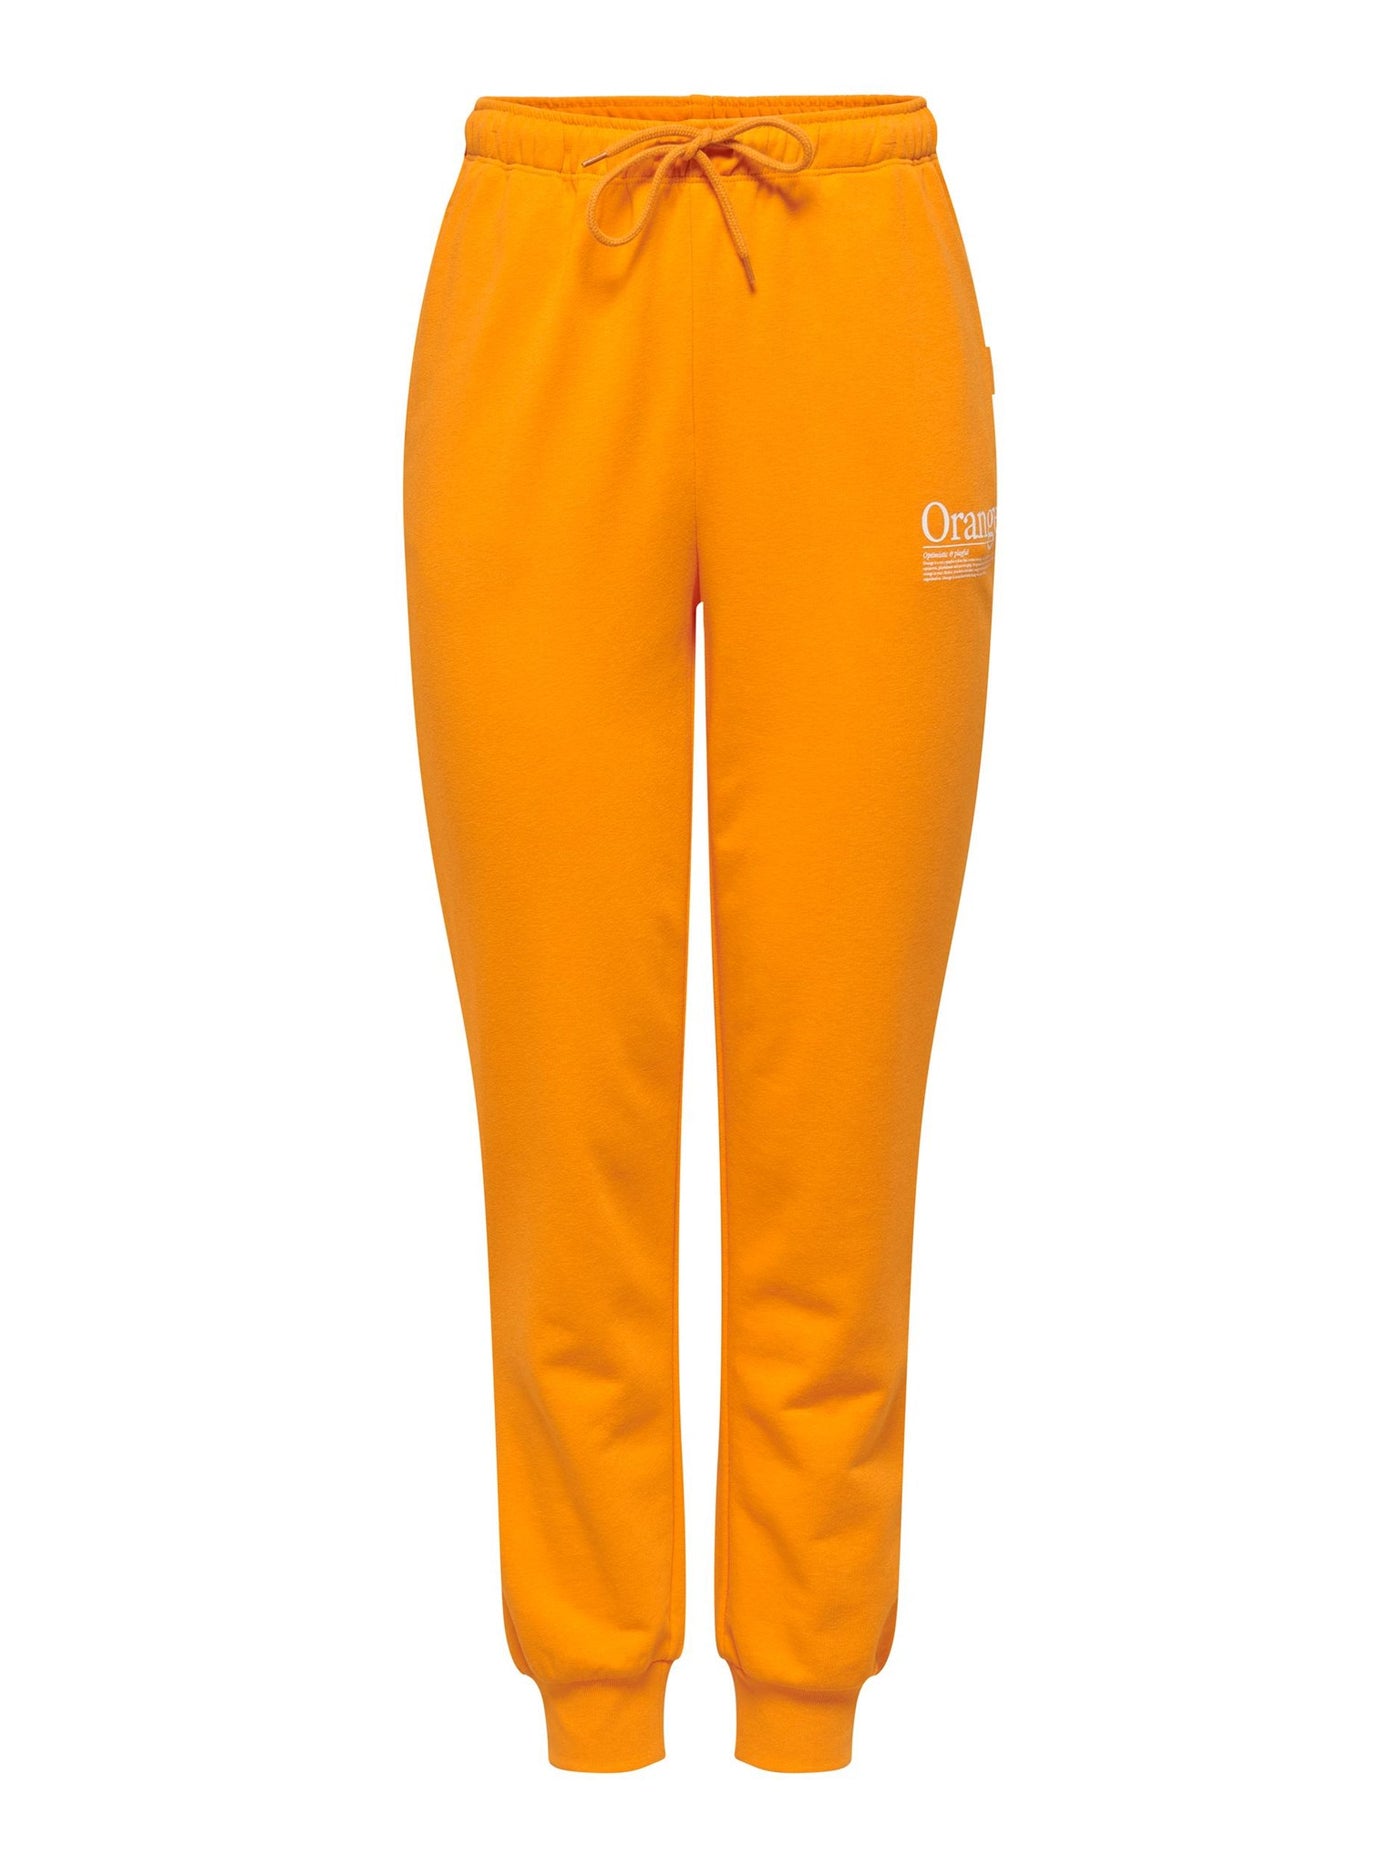 Colour Sweatpants - Orange - ONLY - Orange 3